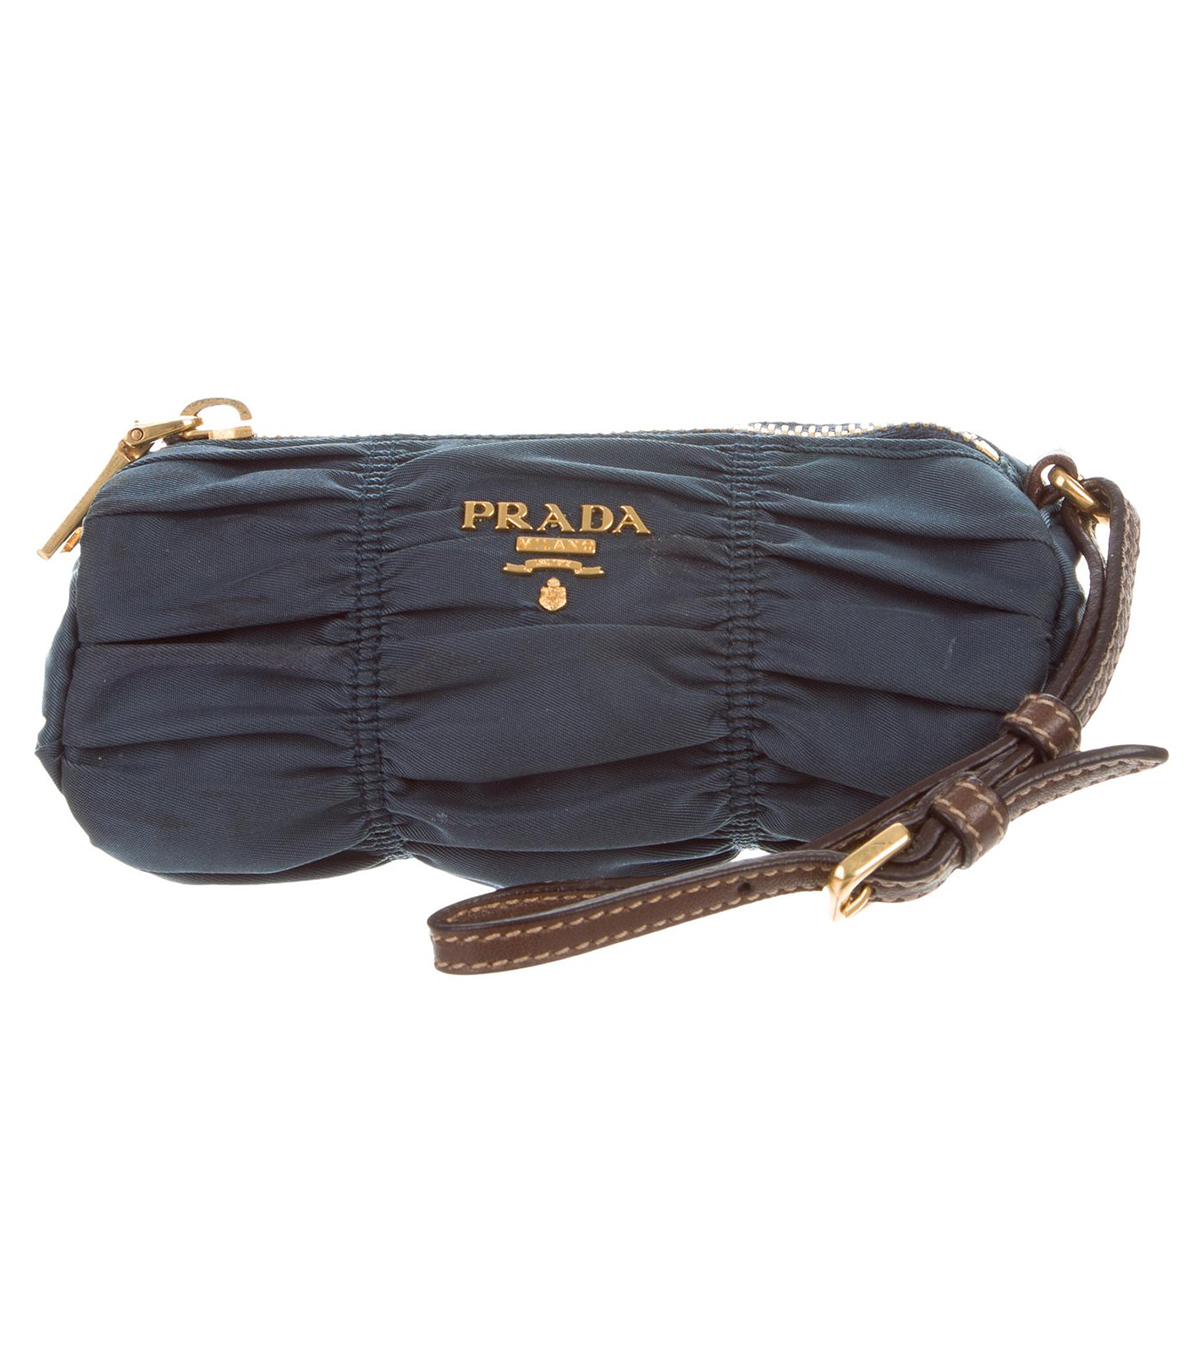 20 Epic Prada Bags That All Clock in Under $250